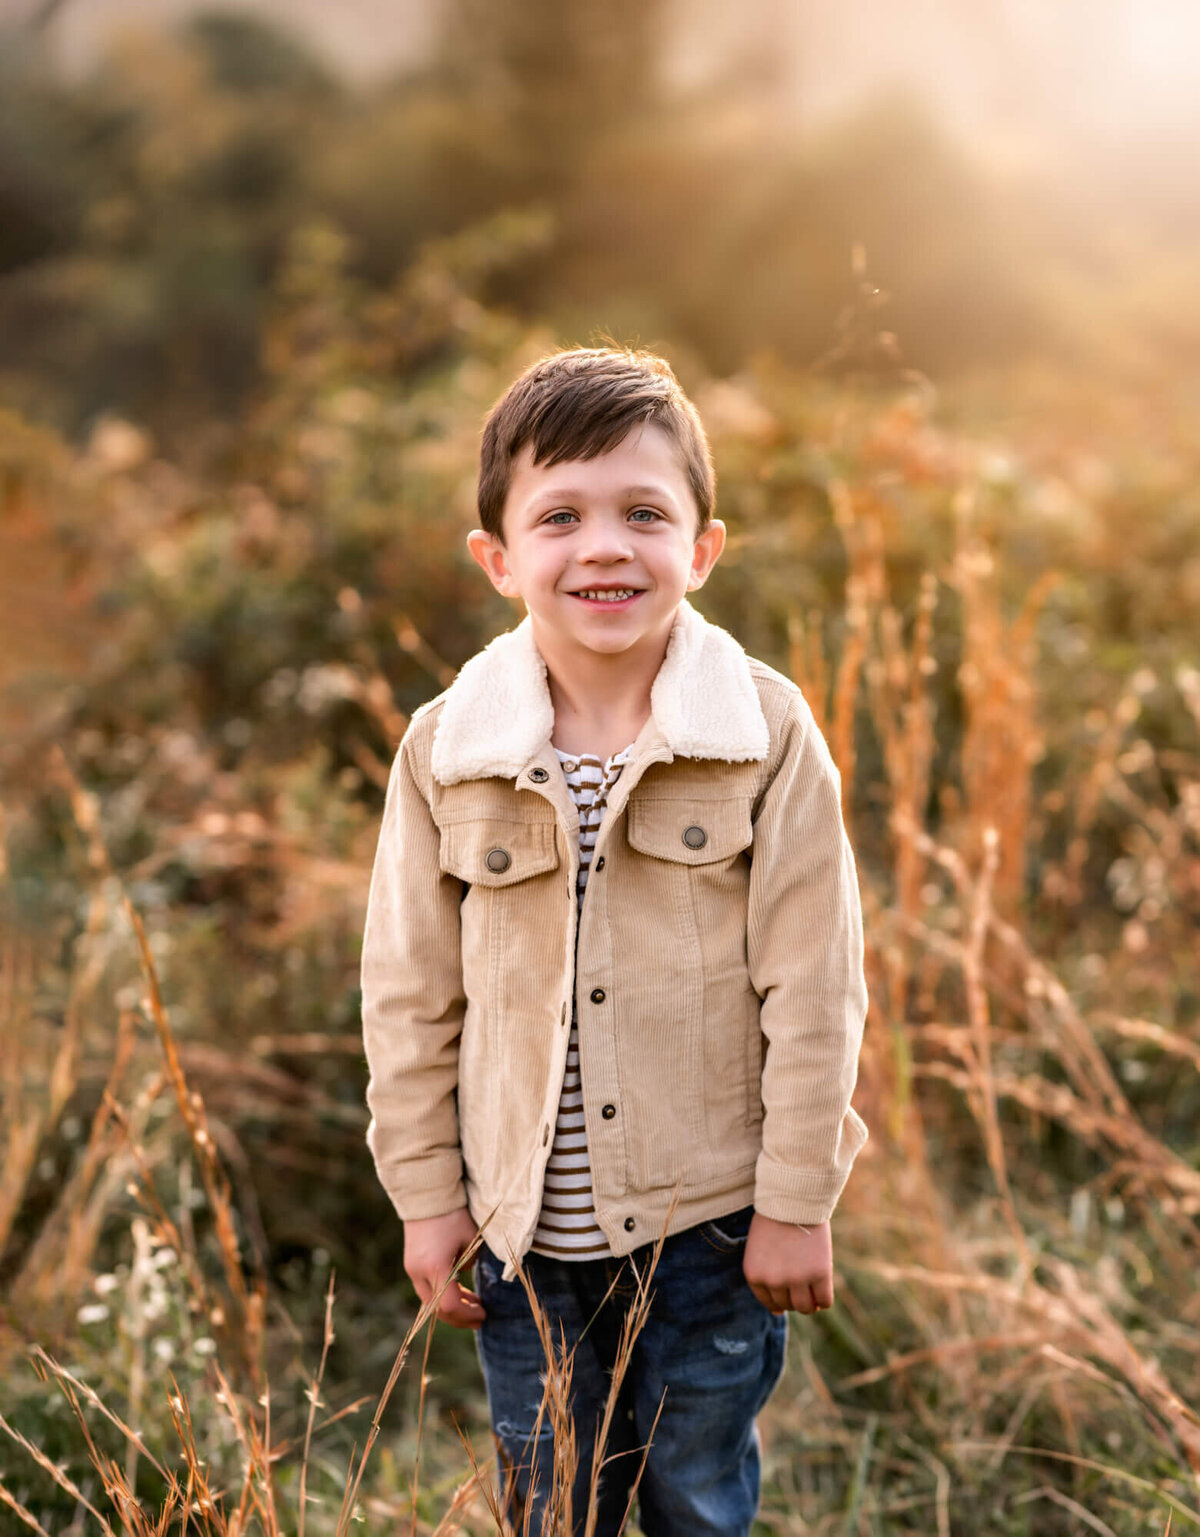 A cute little boy in a corduroy jacket standing the tall grass